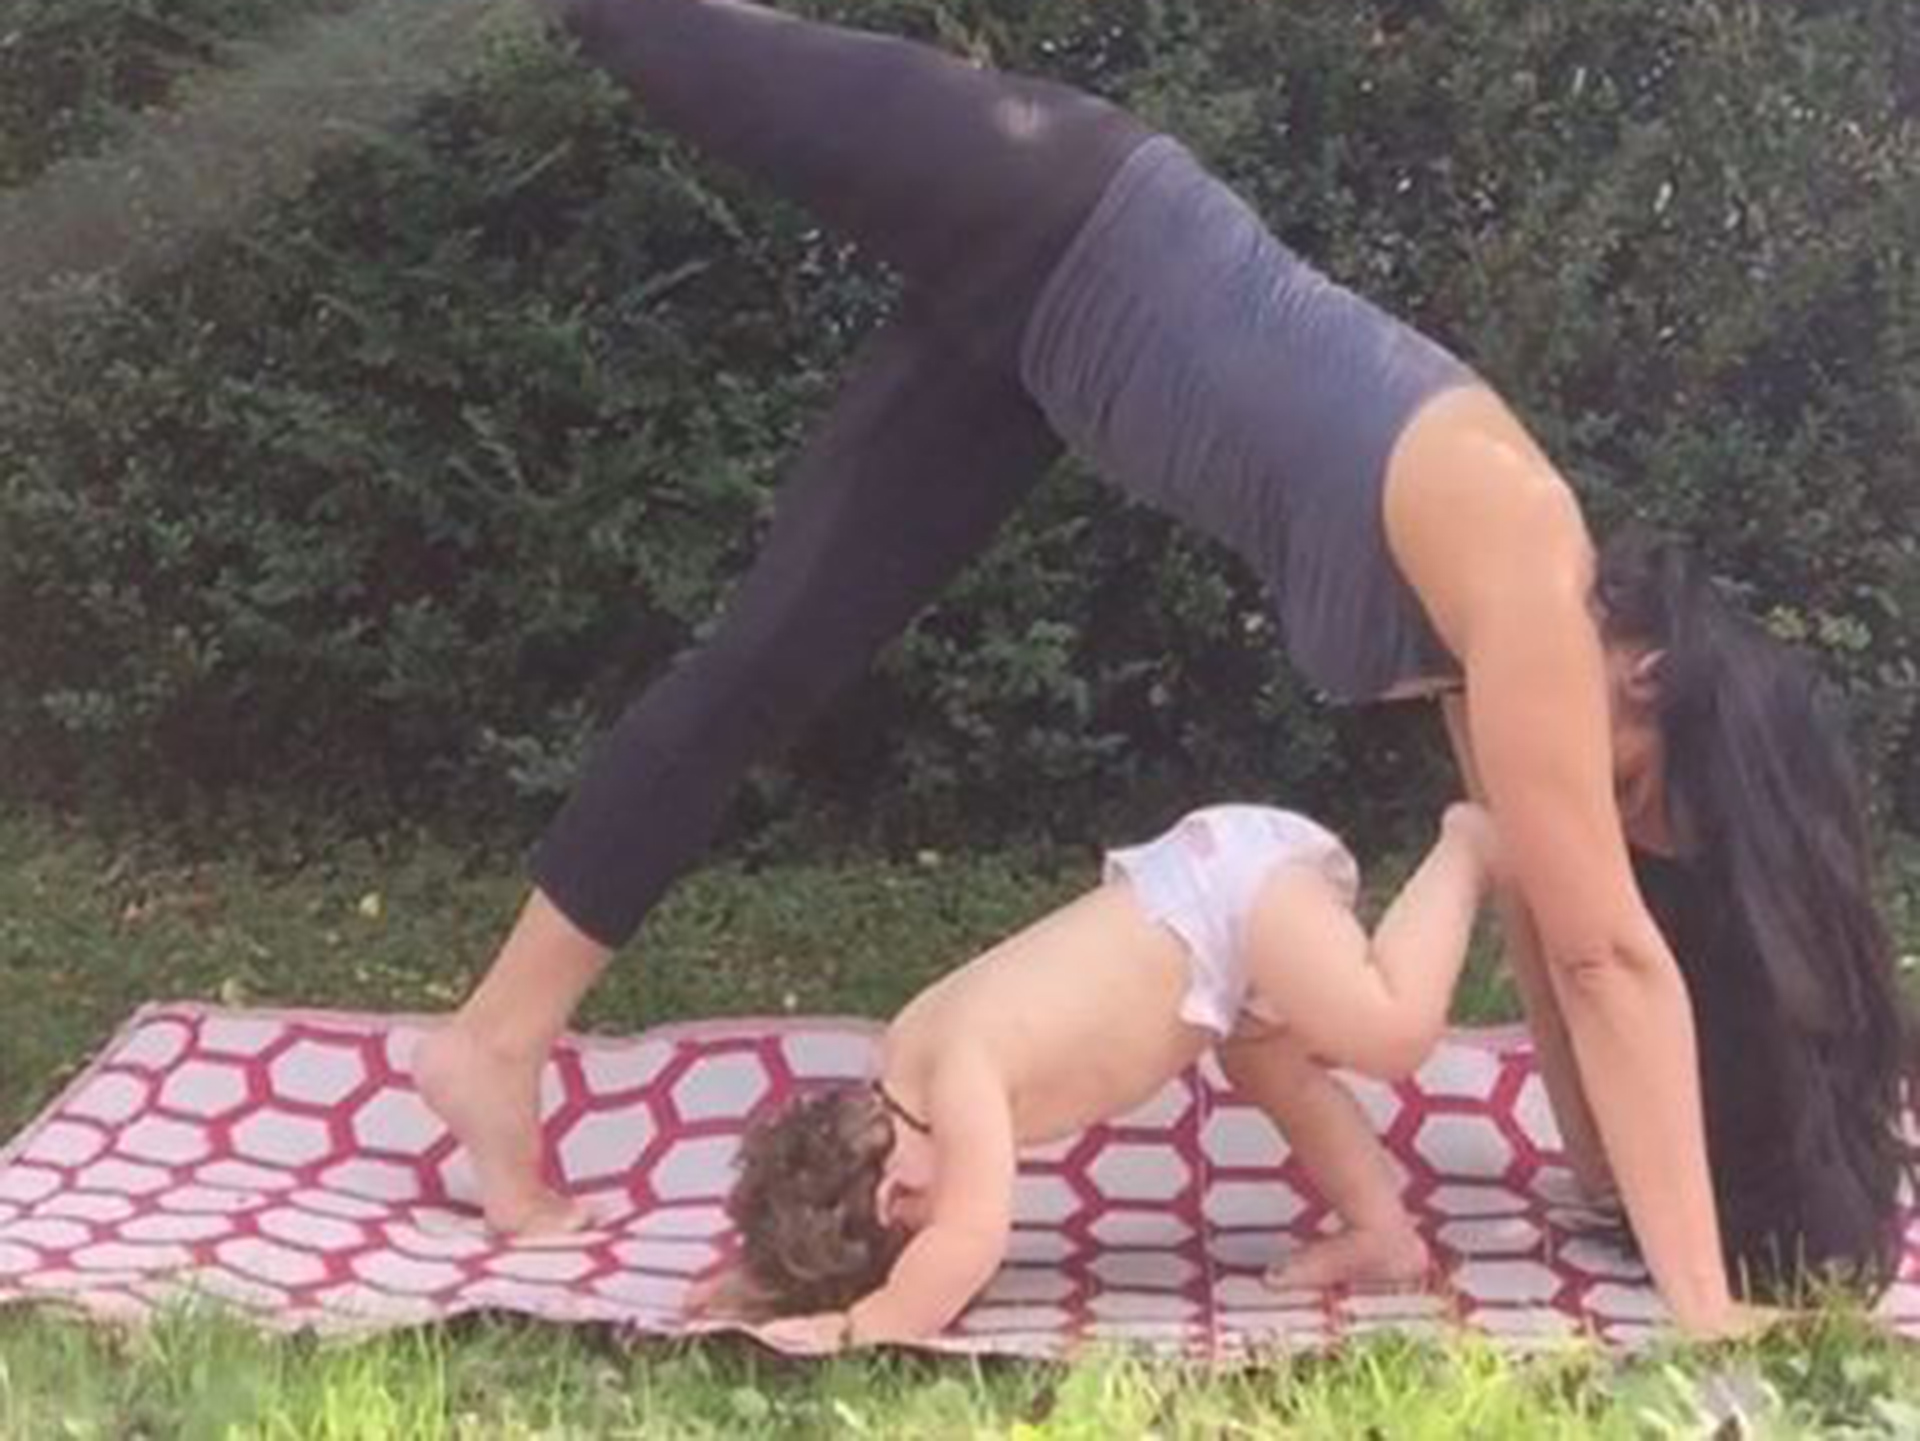 Yogi slammed for breastfeeding upside down